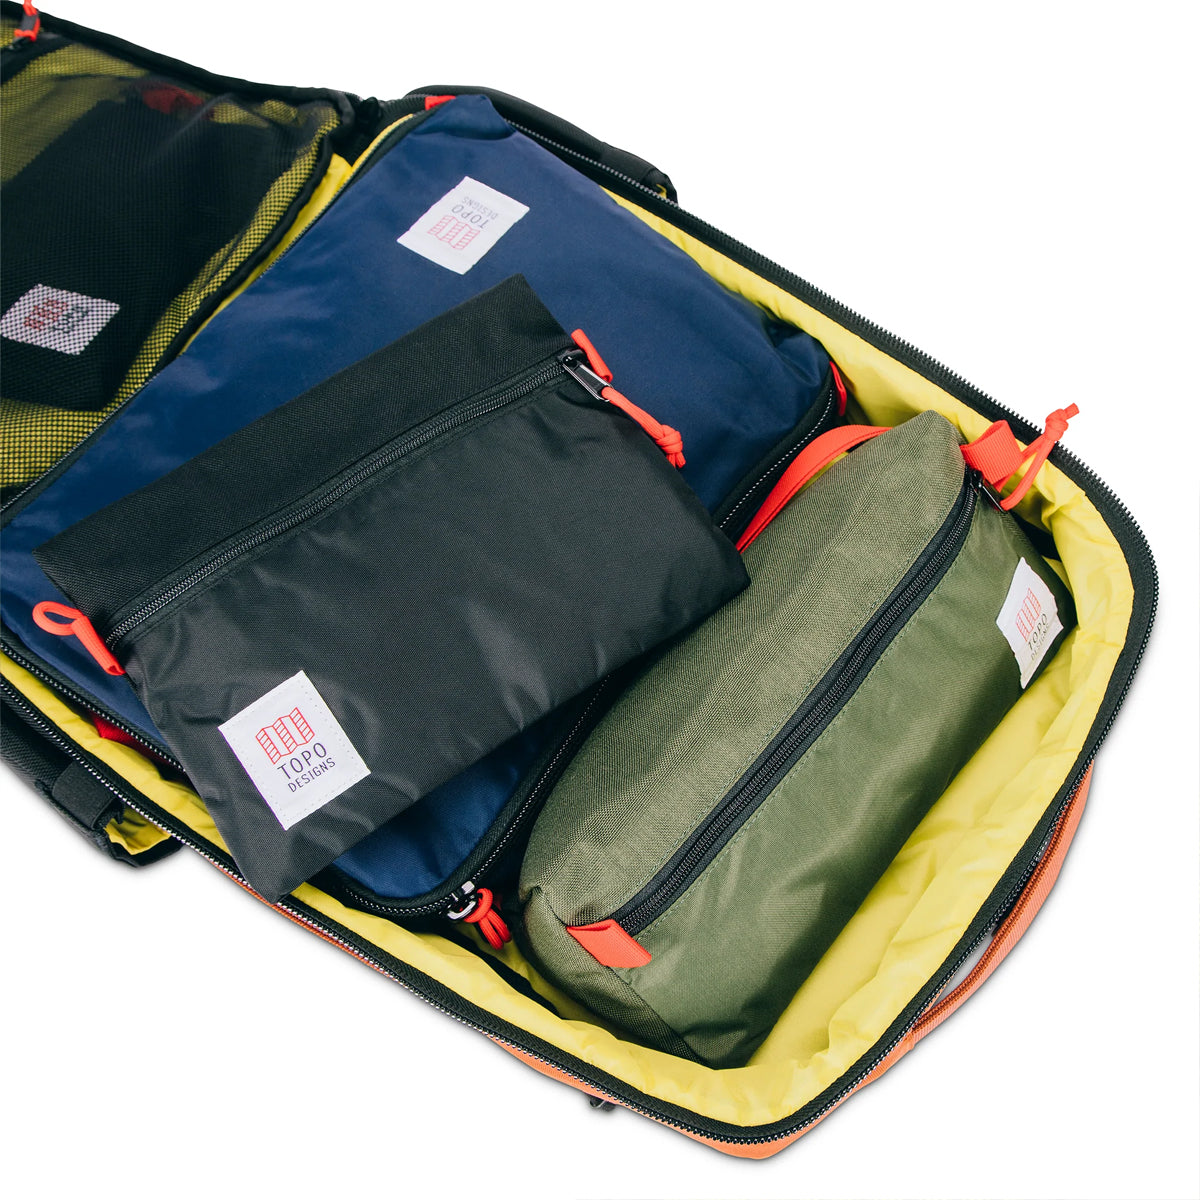 Topo Designs : Global Travel Bag 30L : Black